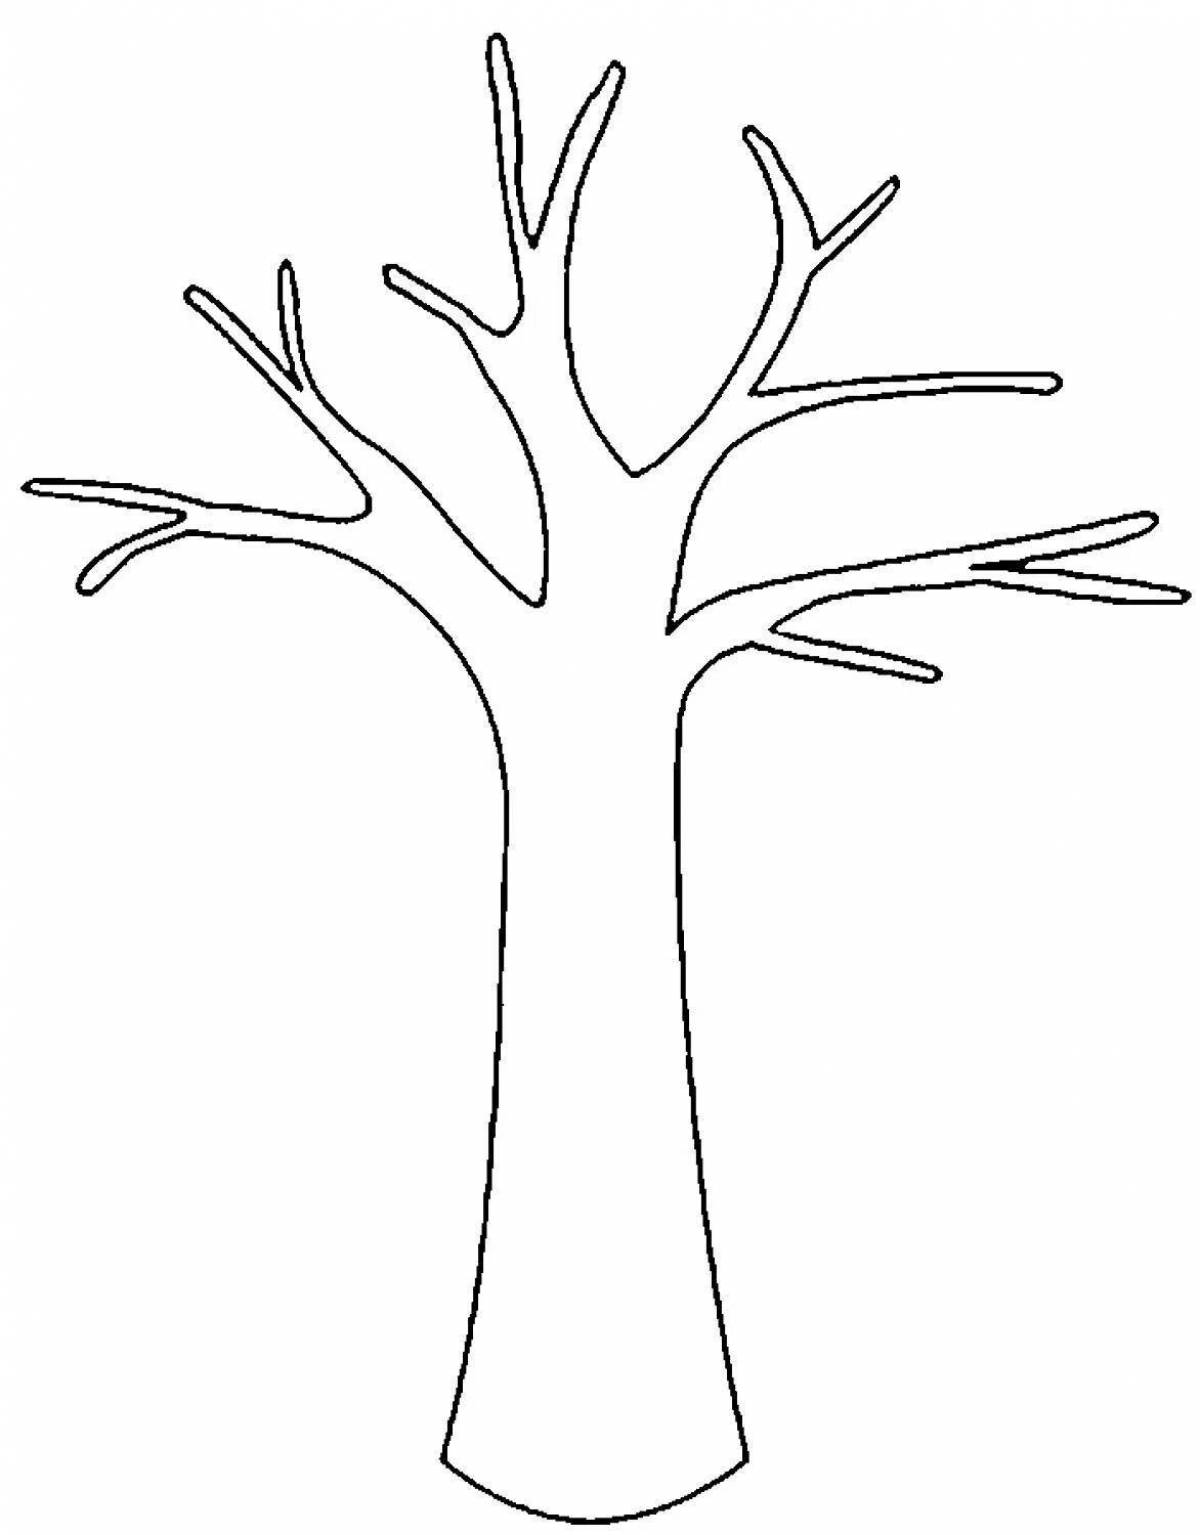 Раскраска силуэт безмятежного дерева